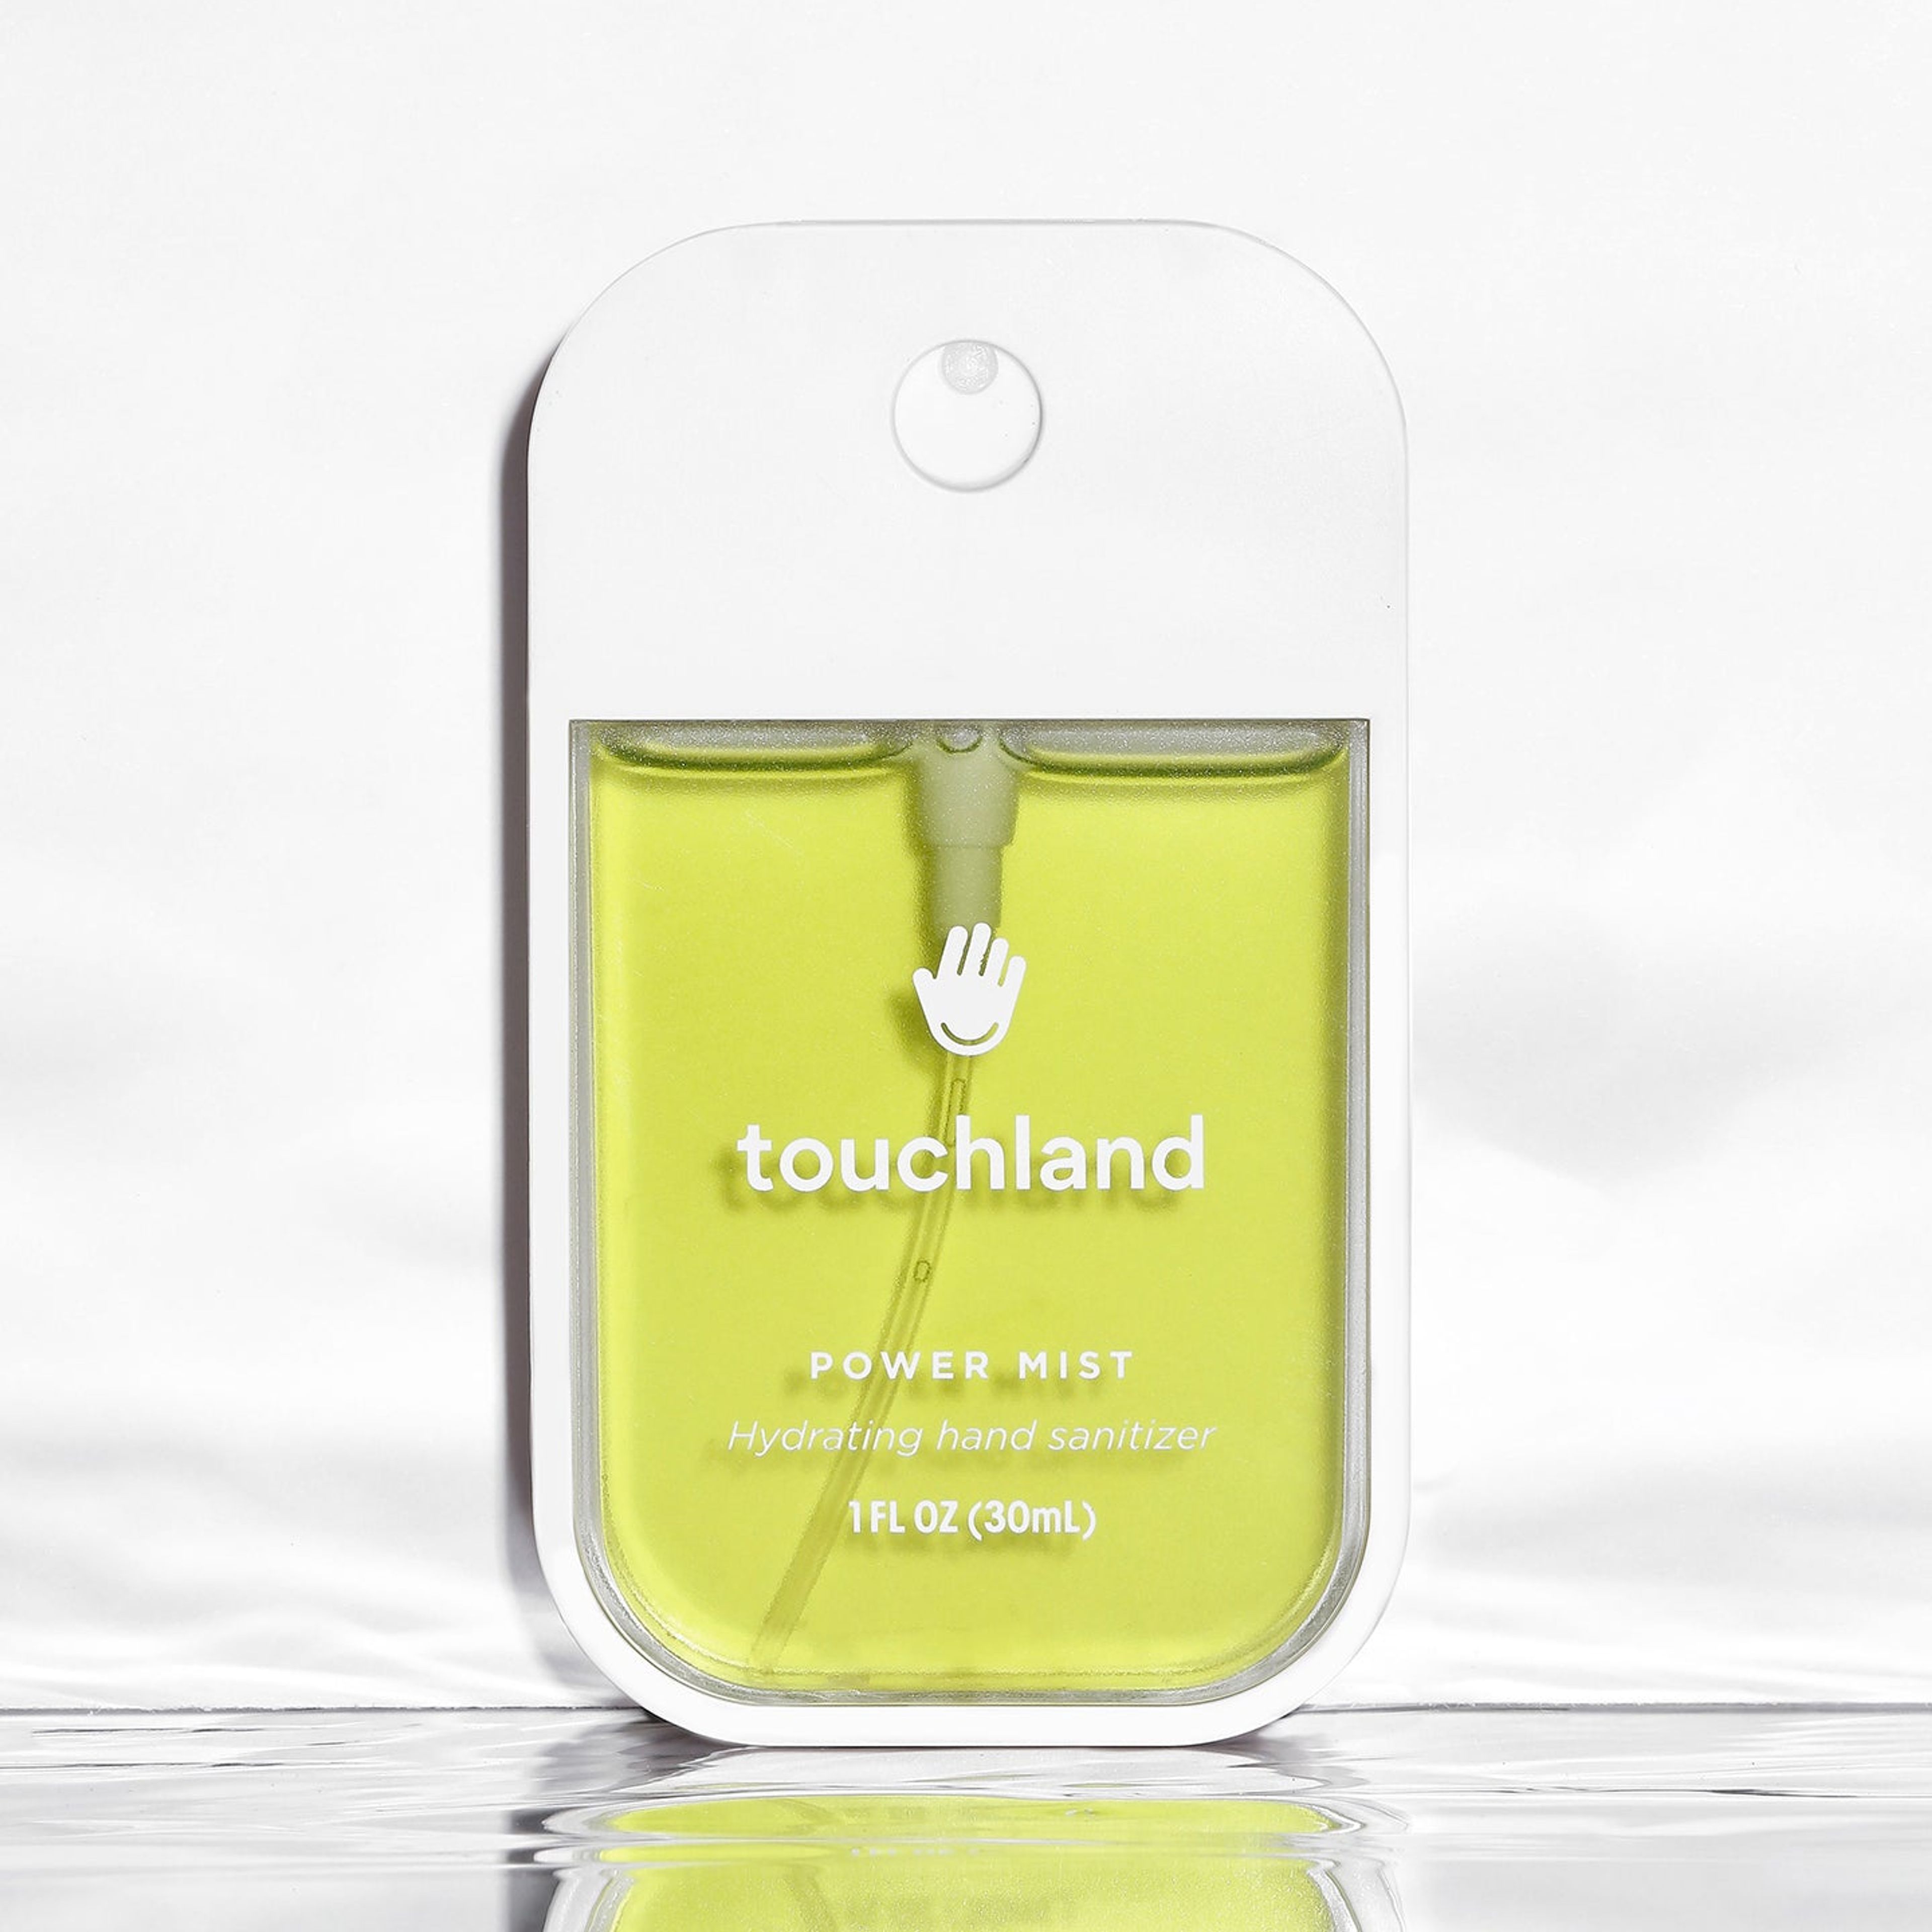 Travel kit – Touchland